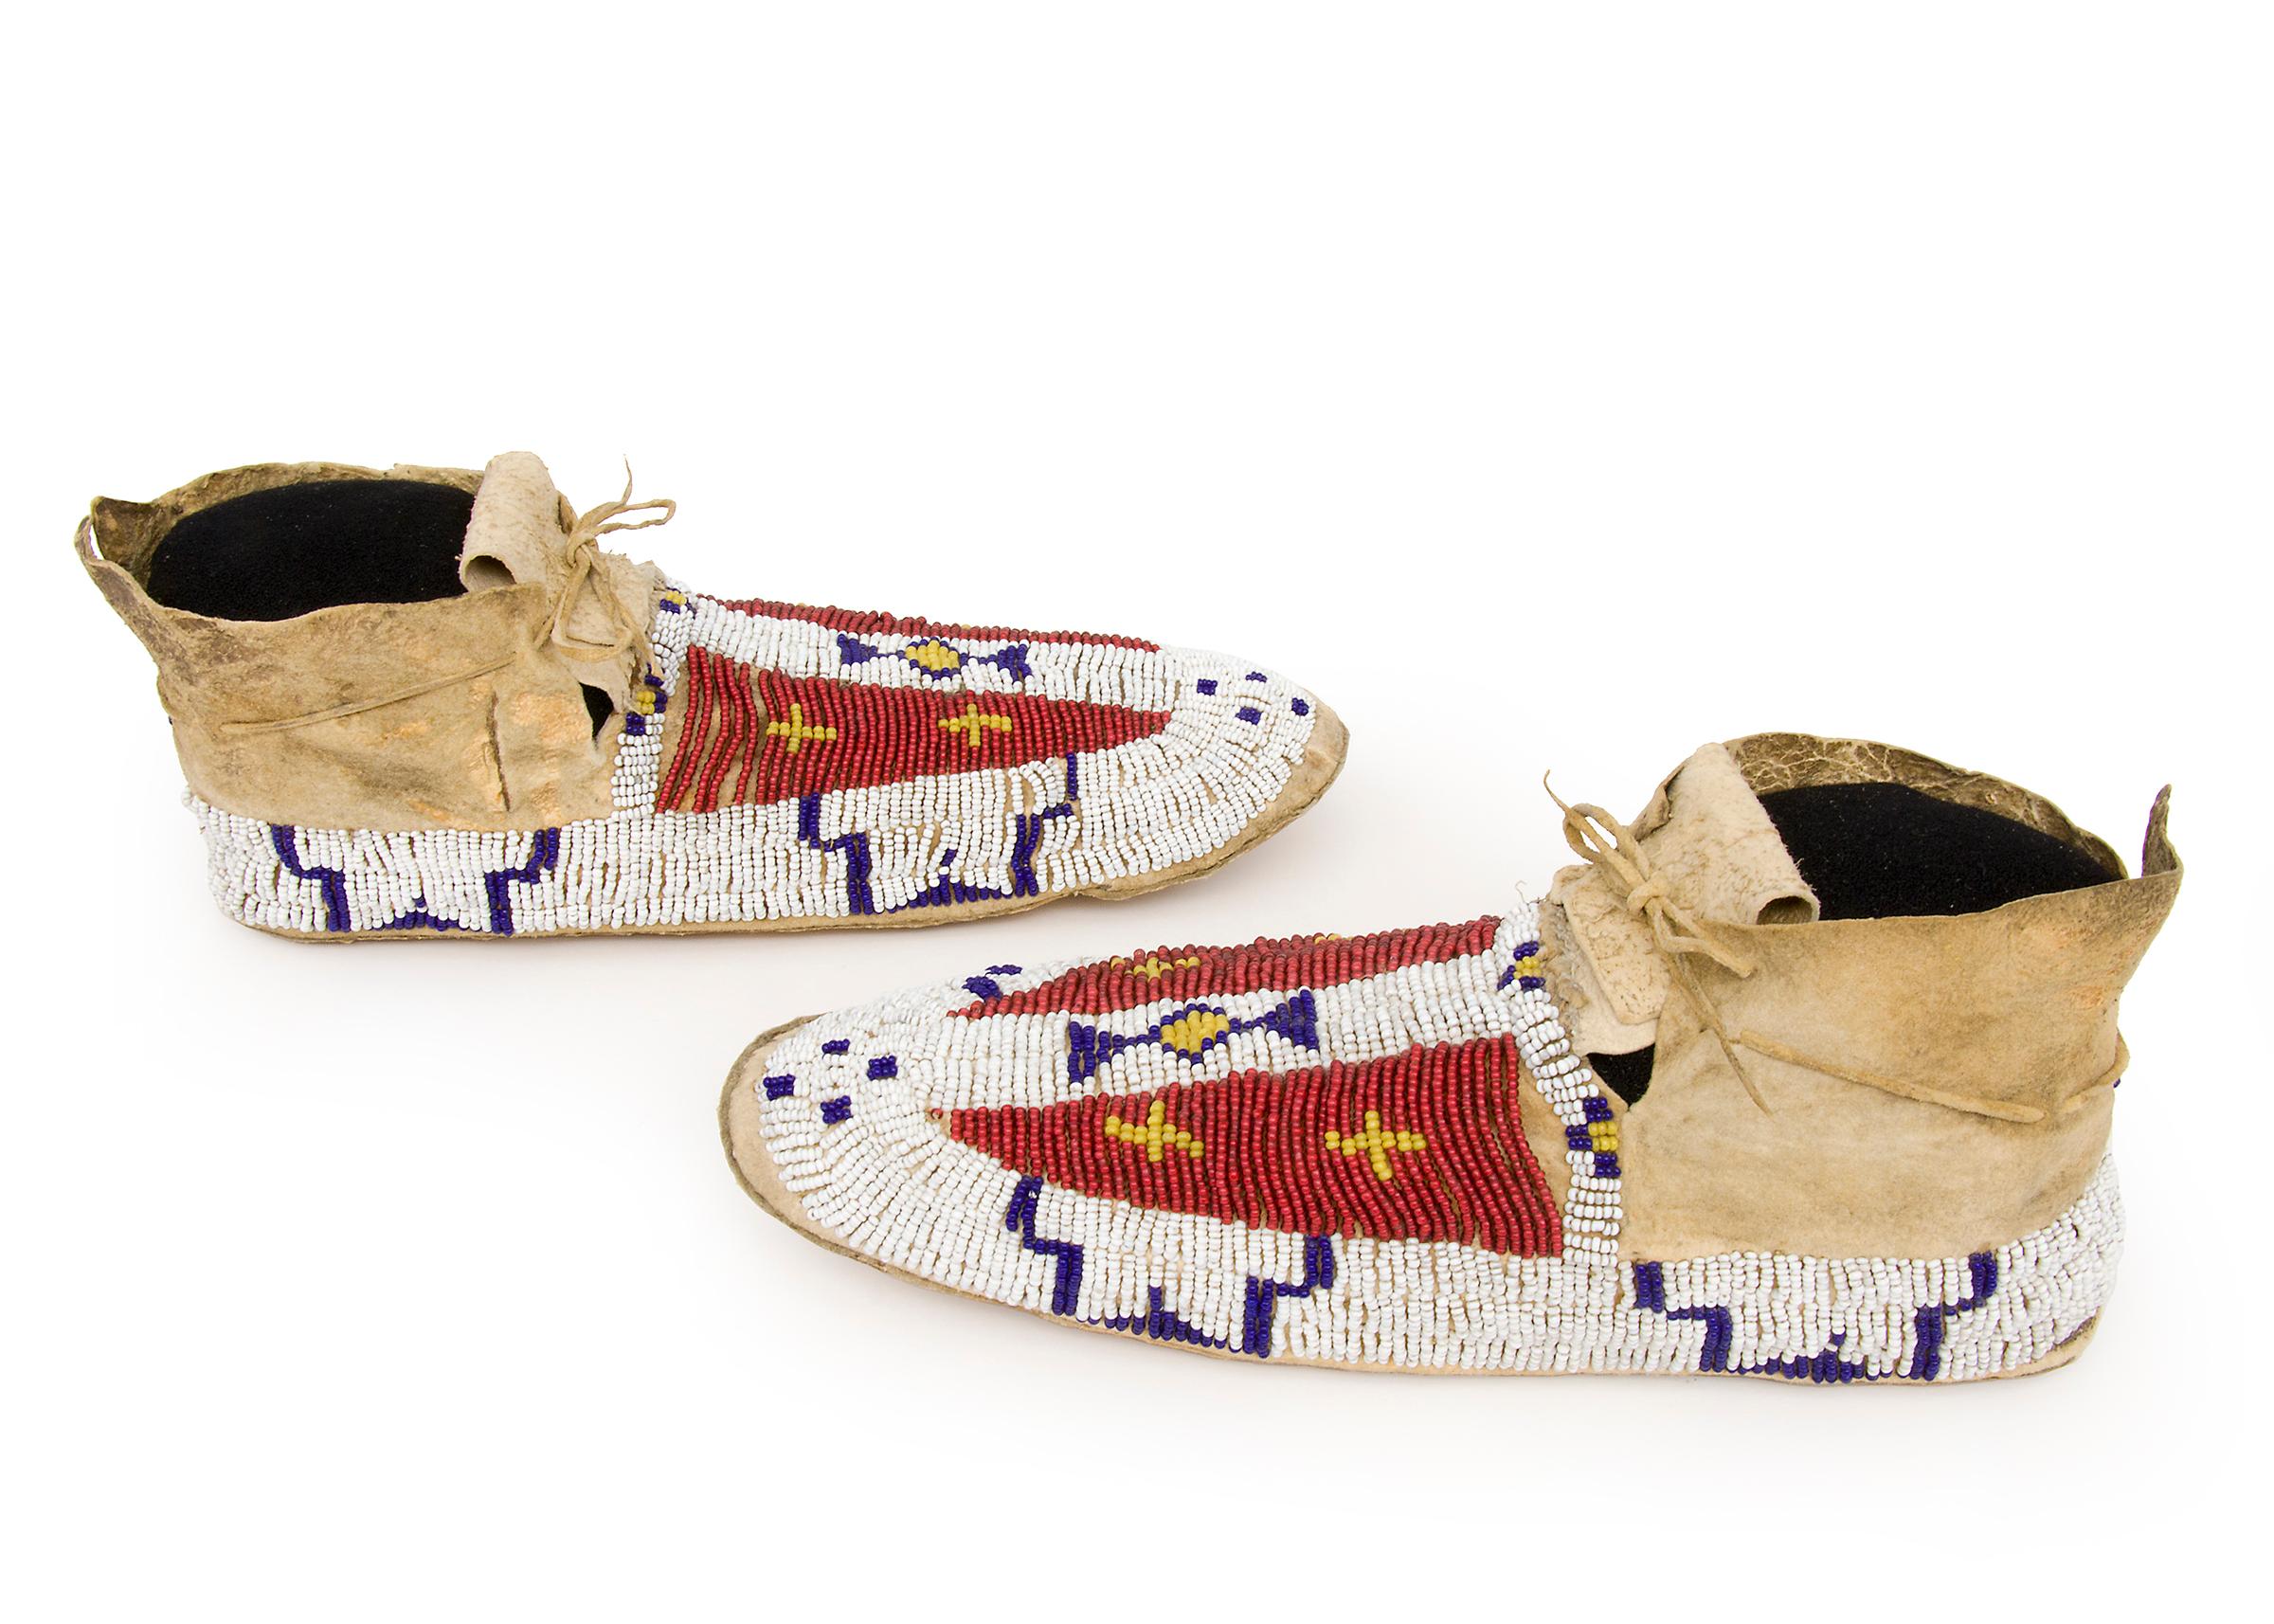 Native American Antique Beaded Moccasins, Cheyenne 'Plains Indian', circa 1880s, Buffalo Tracks